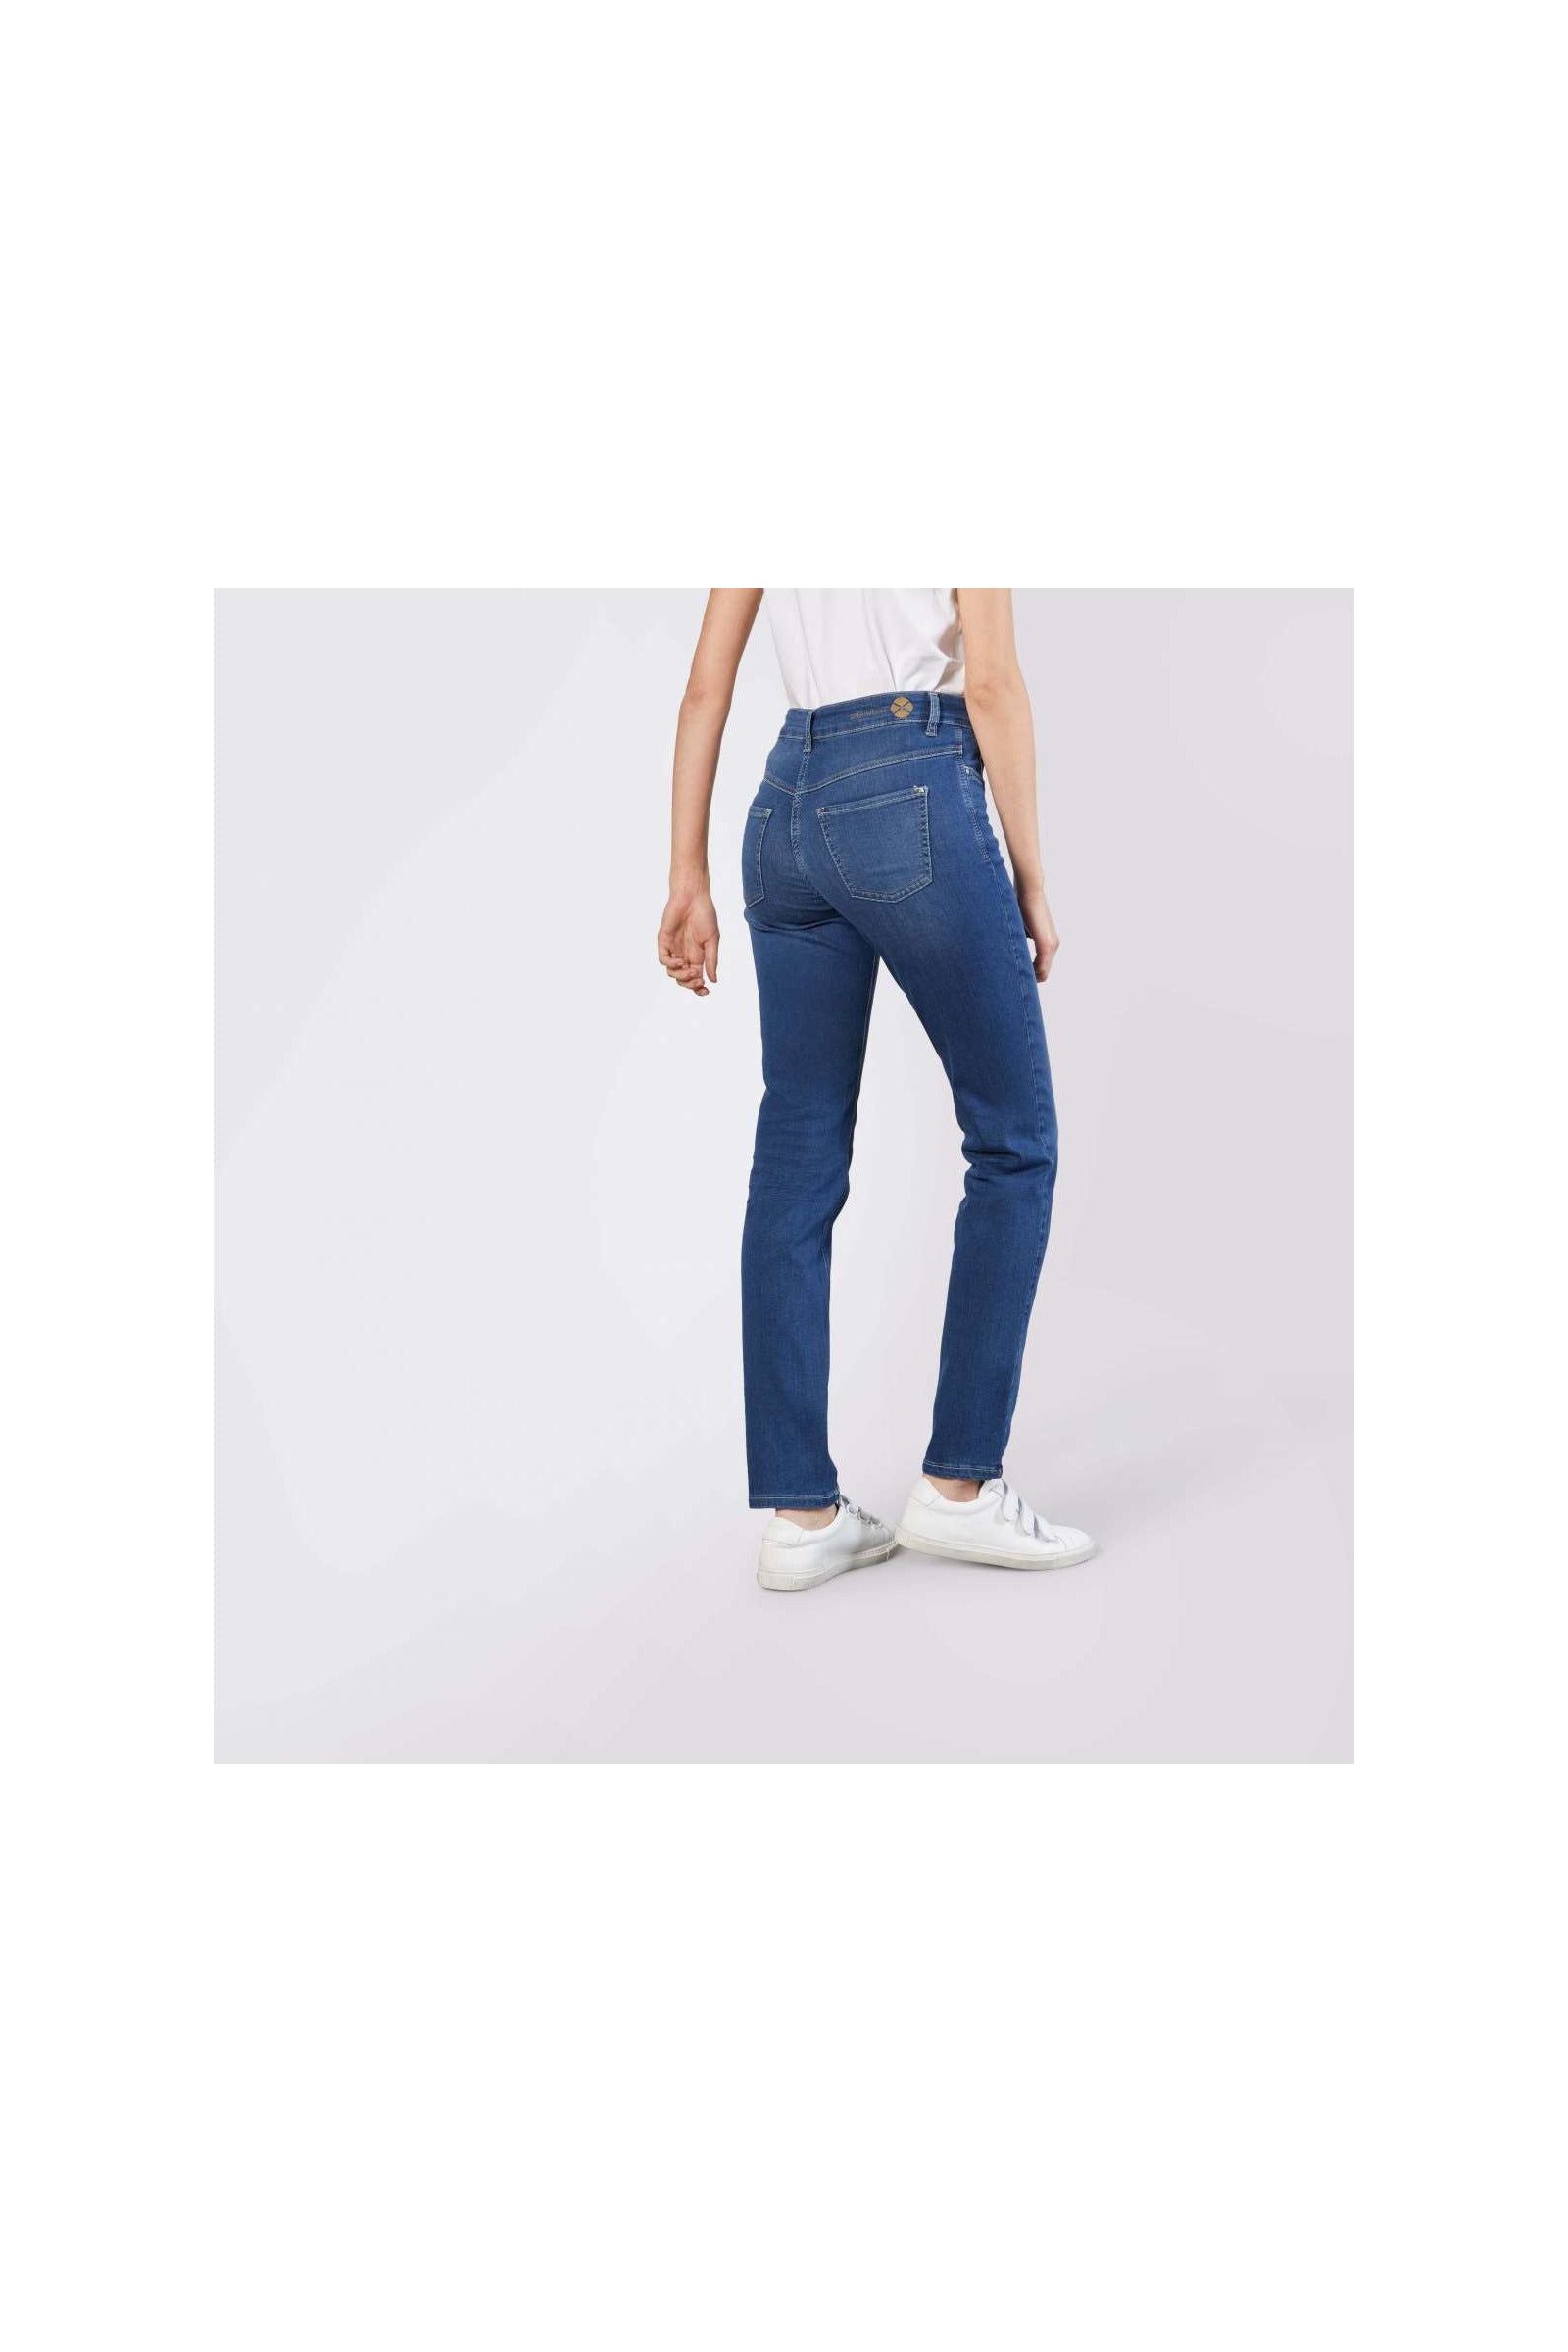 Jeans – Straight Robertson | D569 Authe Mid 5401-90-355L Legs Mac Madison Denim Blue Dream